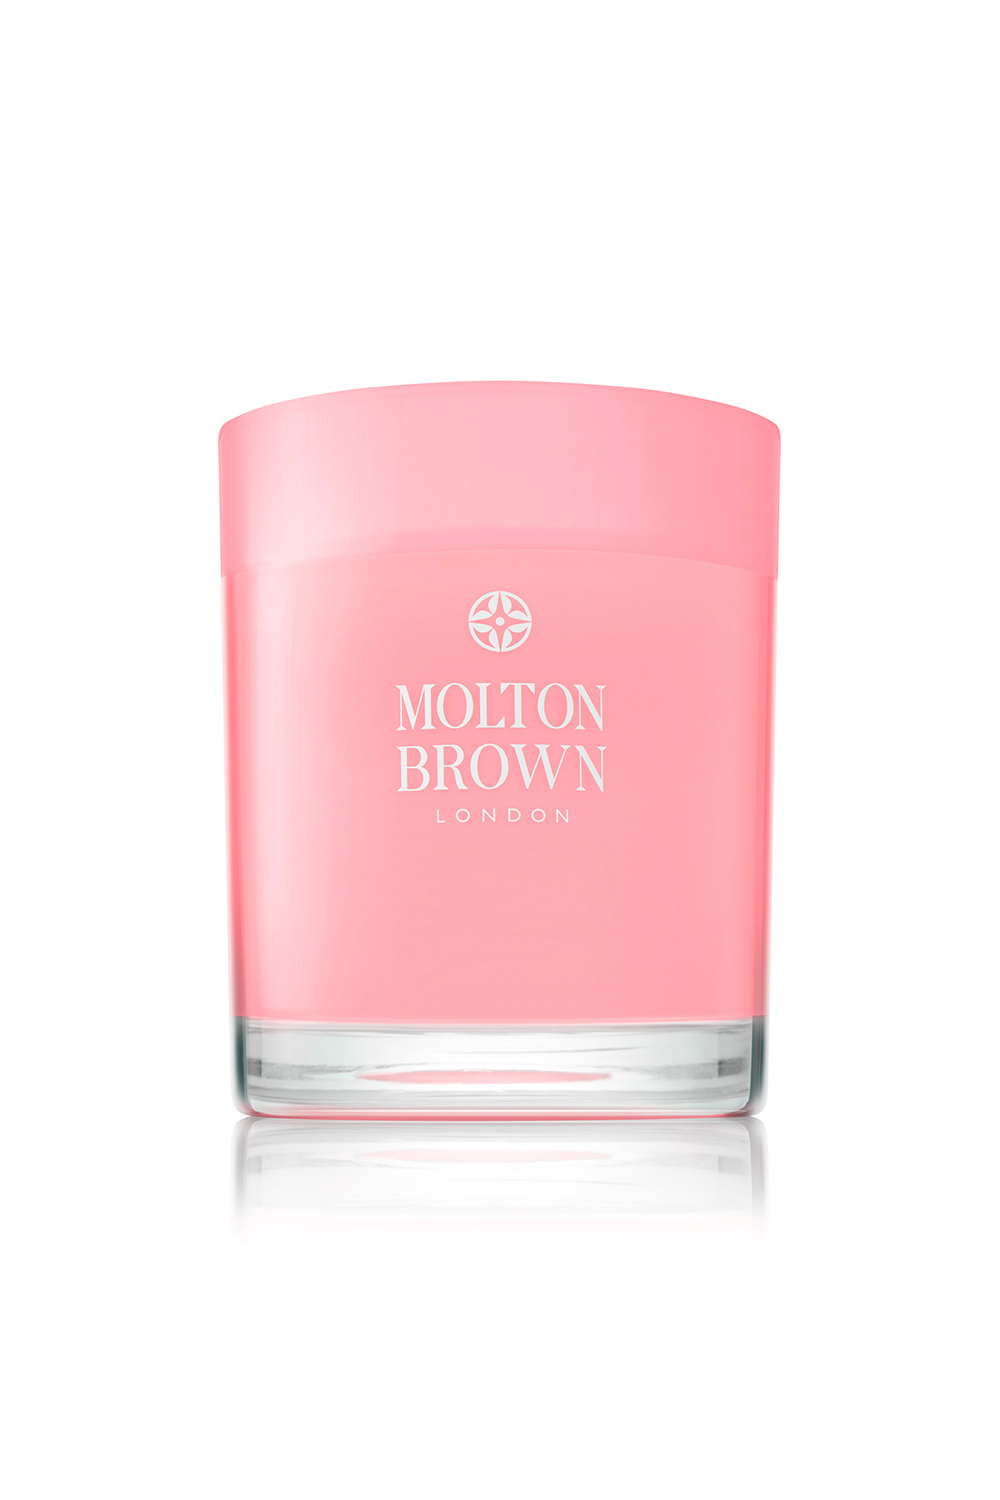 MOLTON BROWN - Κερί Delicious Rhubarb & Rose Single Wick- 180g Γυναικεία/Αξεσουάρ/Σπίτι